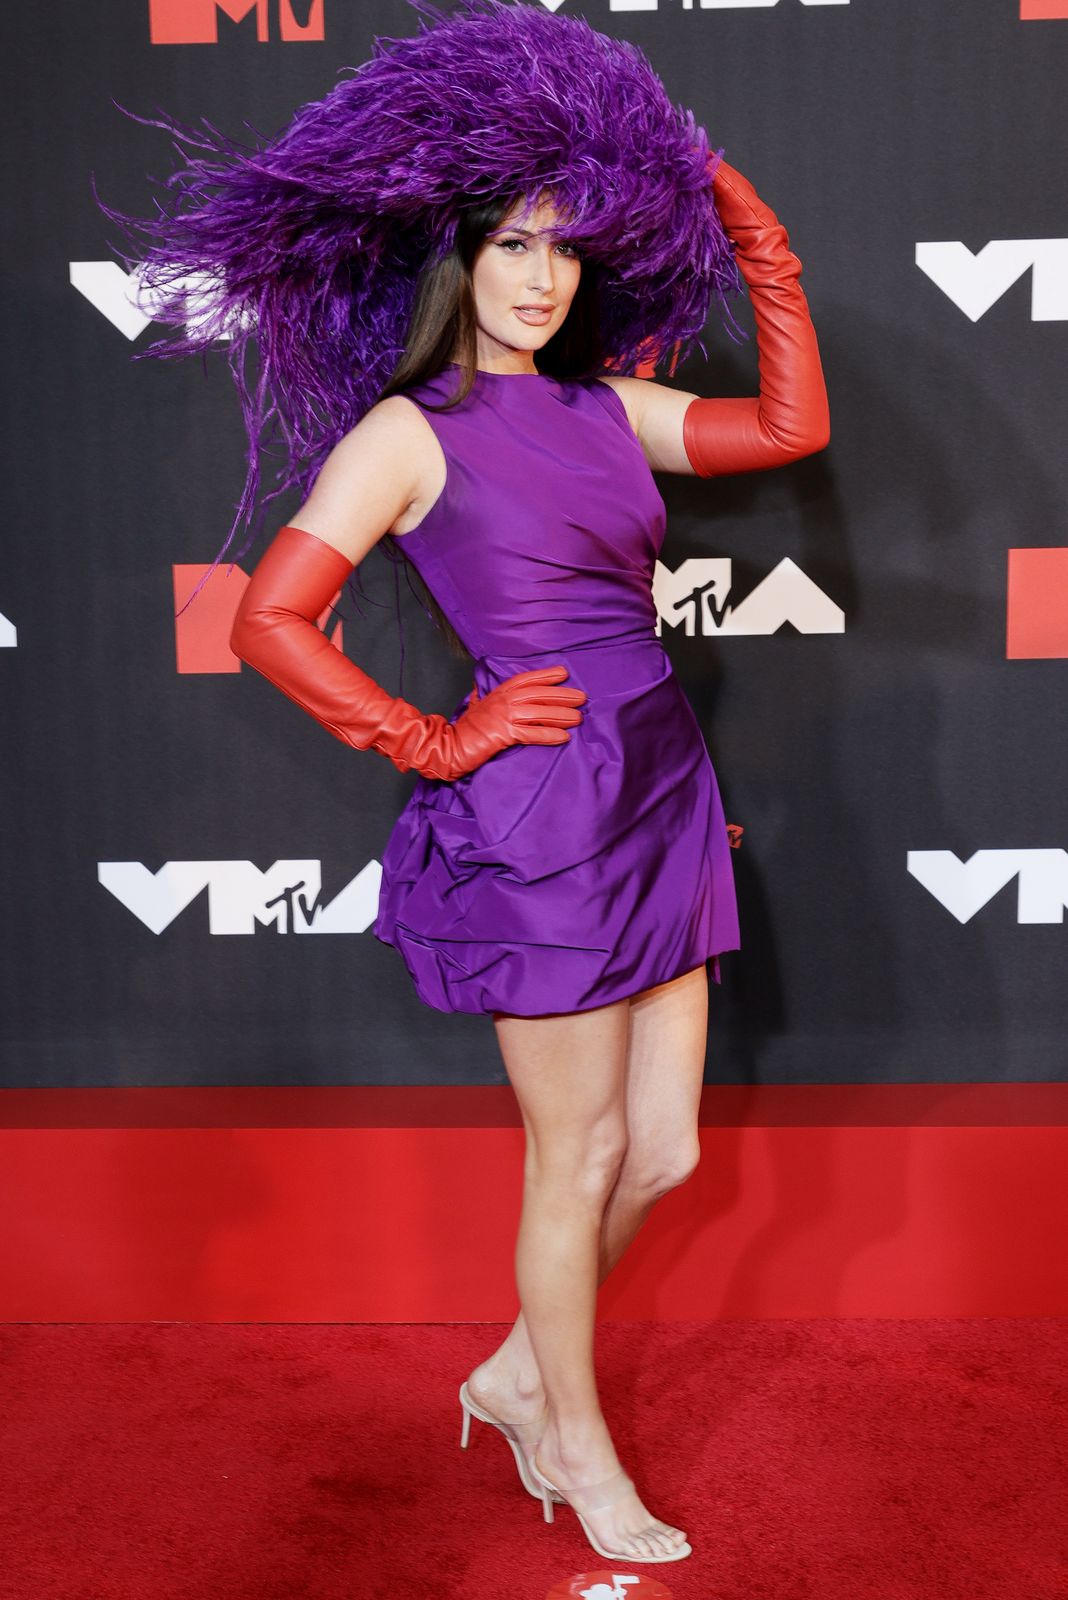 Кейси Масгрэйвс на церемонии вручения премий MTV Video Music Awards 2021, фото 1